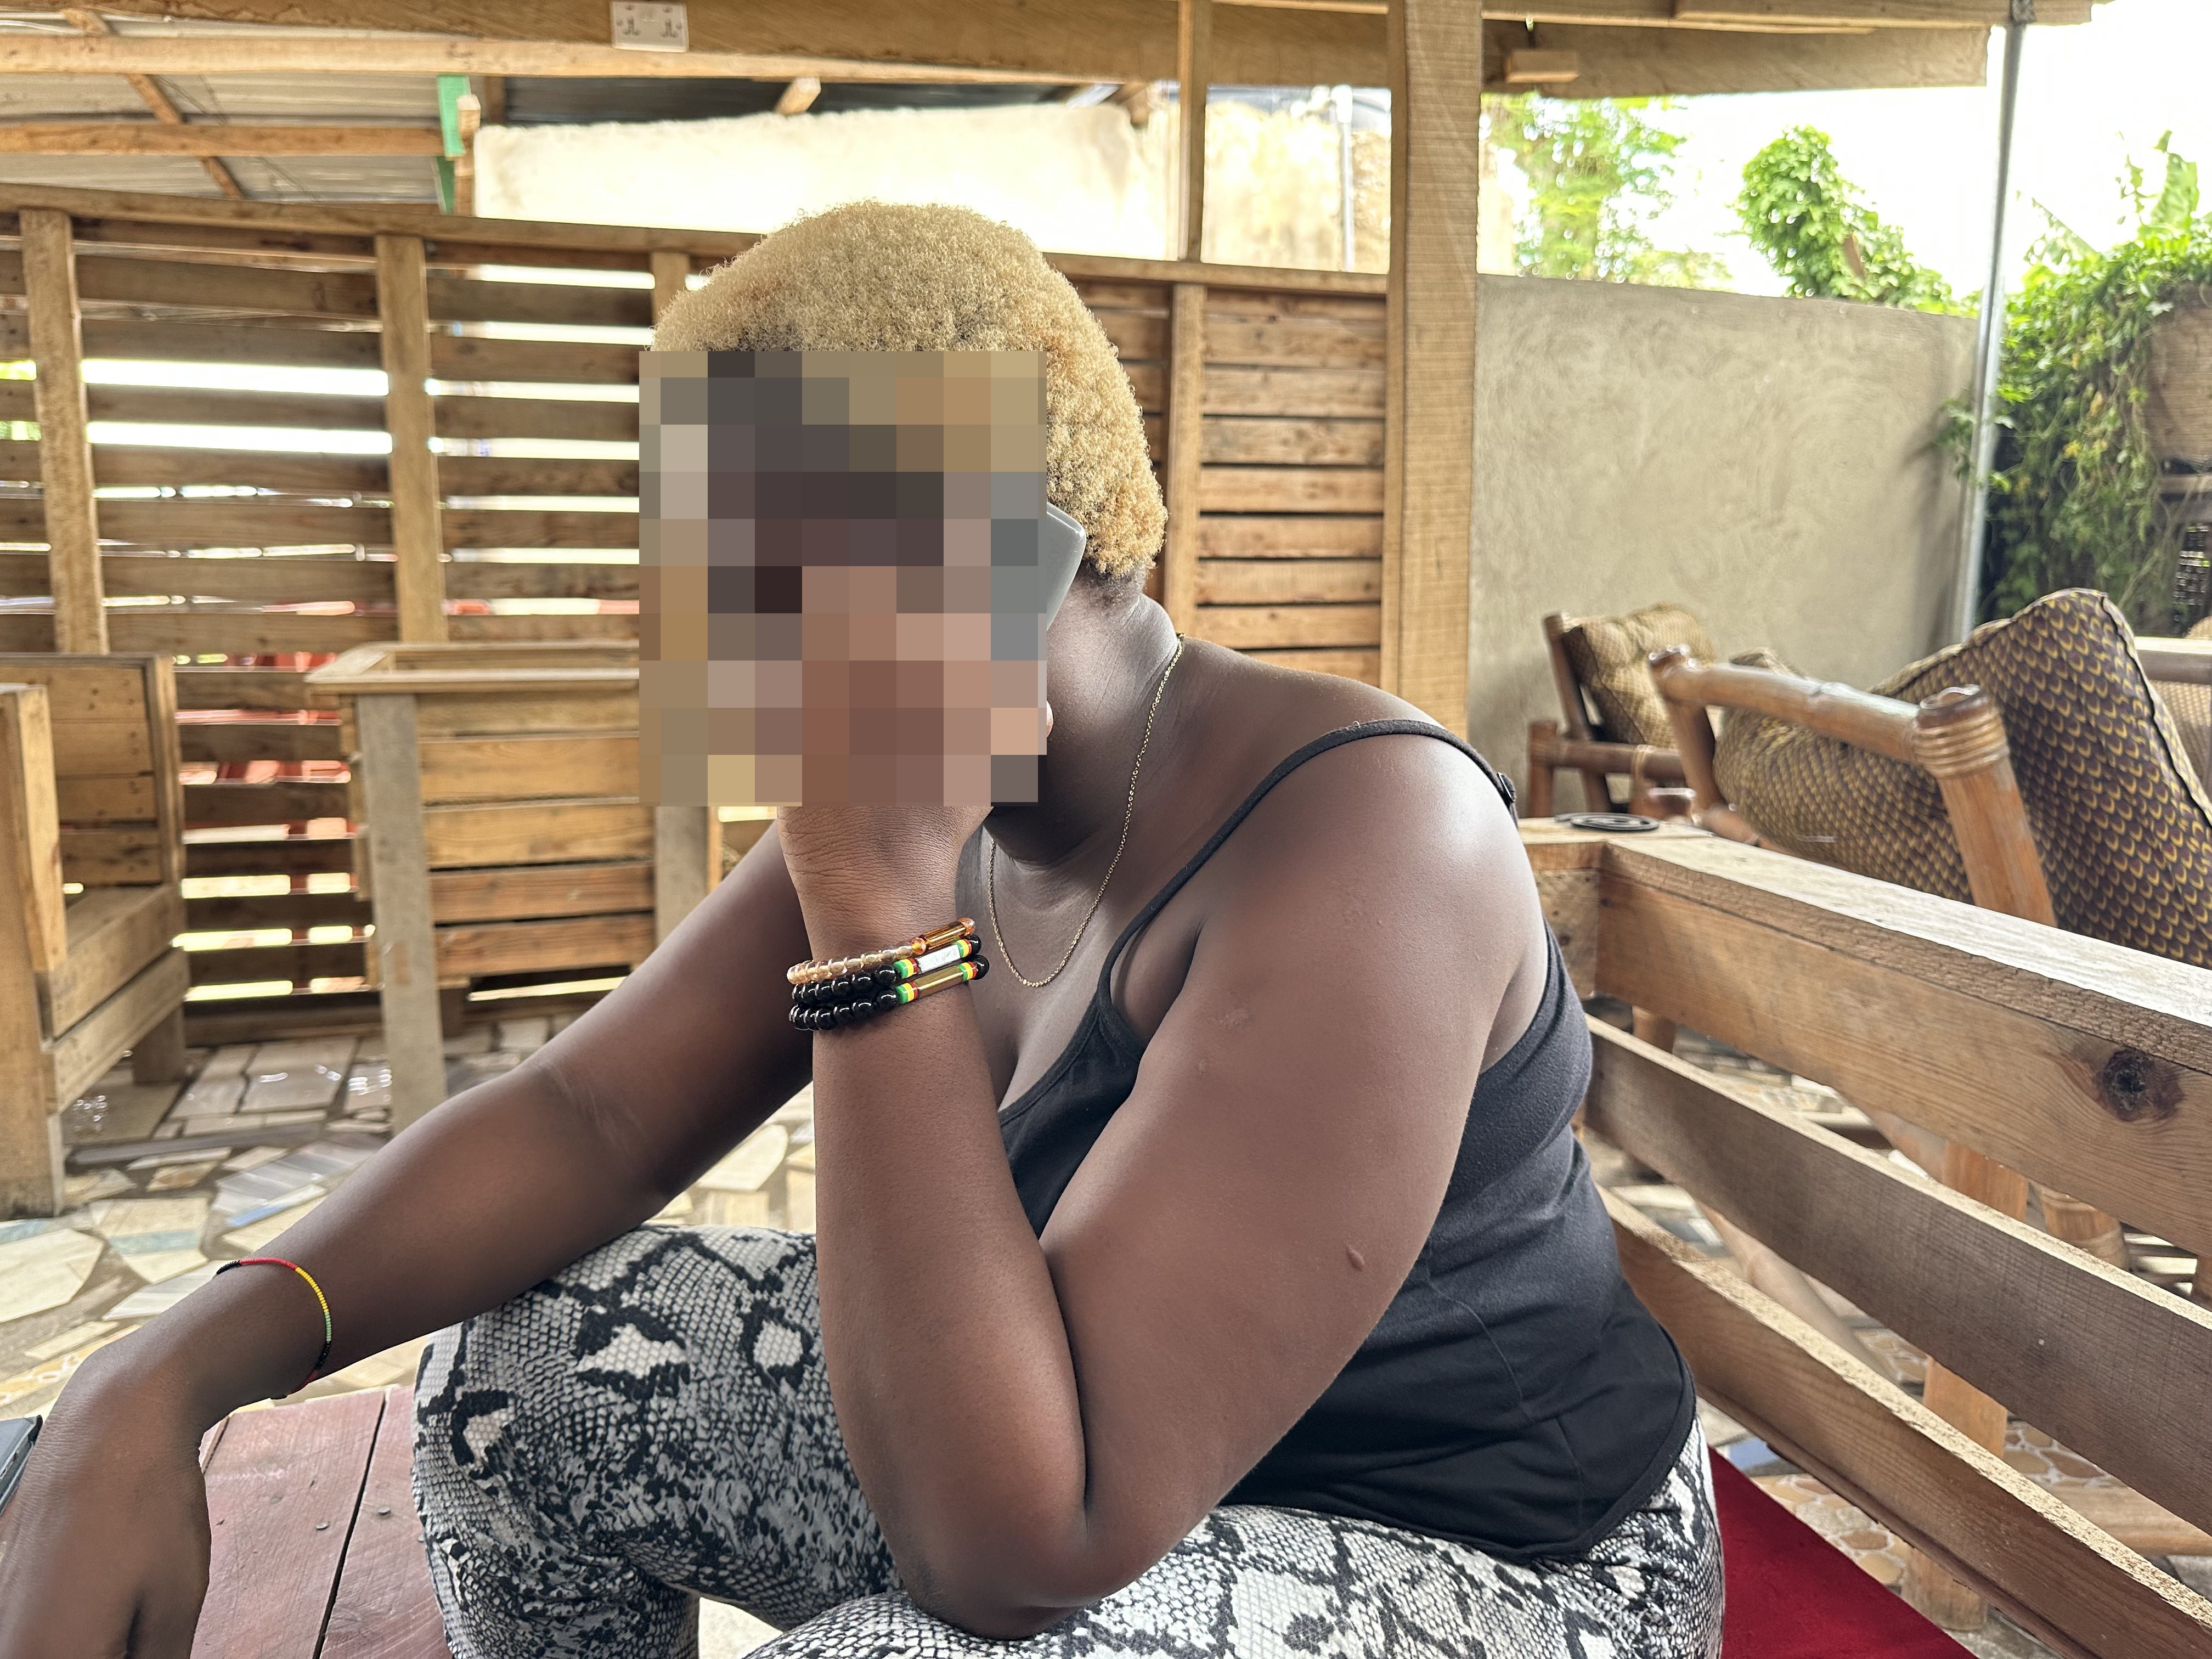 I knew it was a risk A Nigerian migrant sex worker in Ghana Womens Rights Al Jazeera pic image